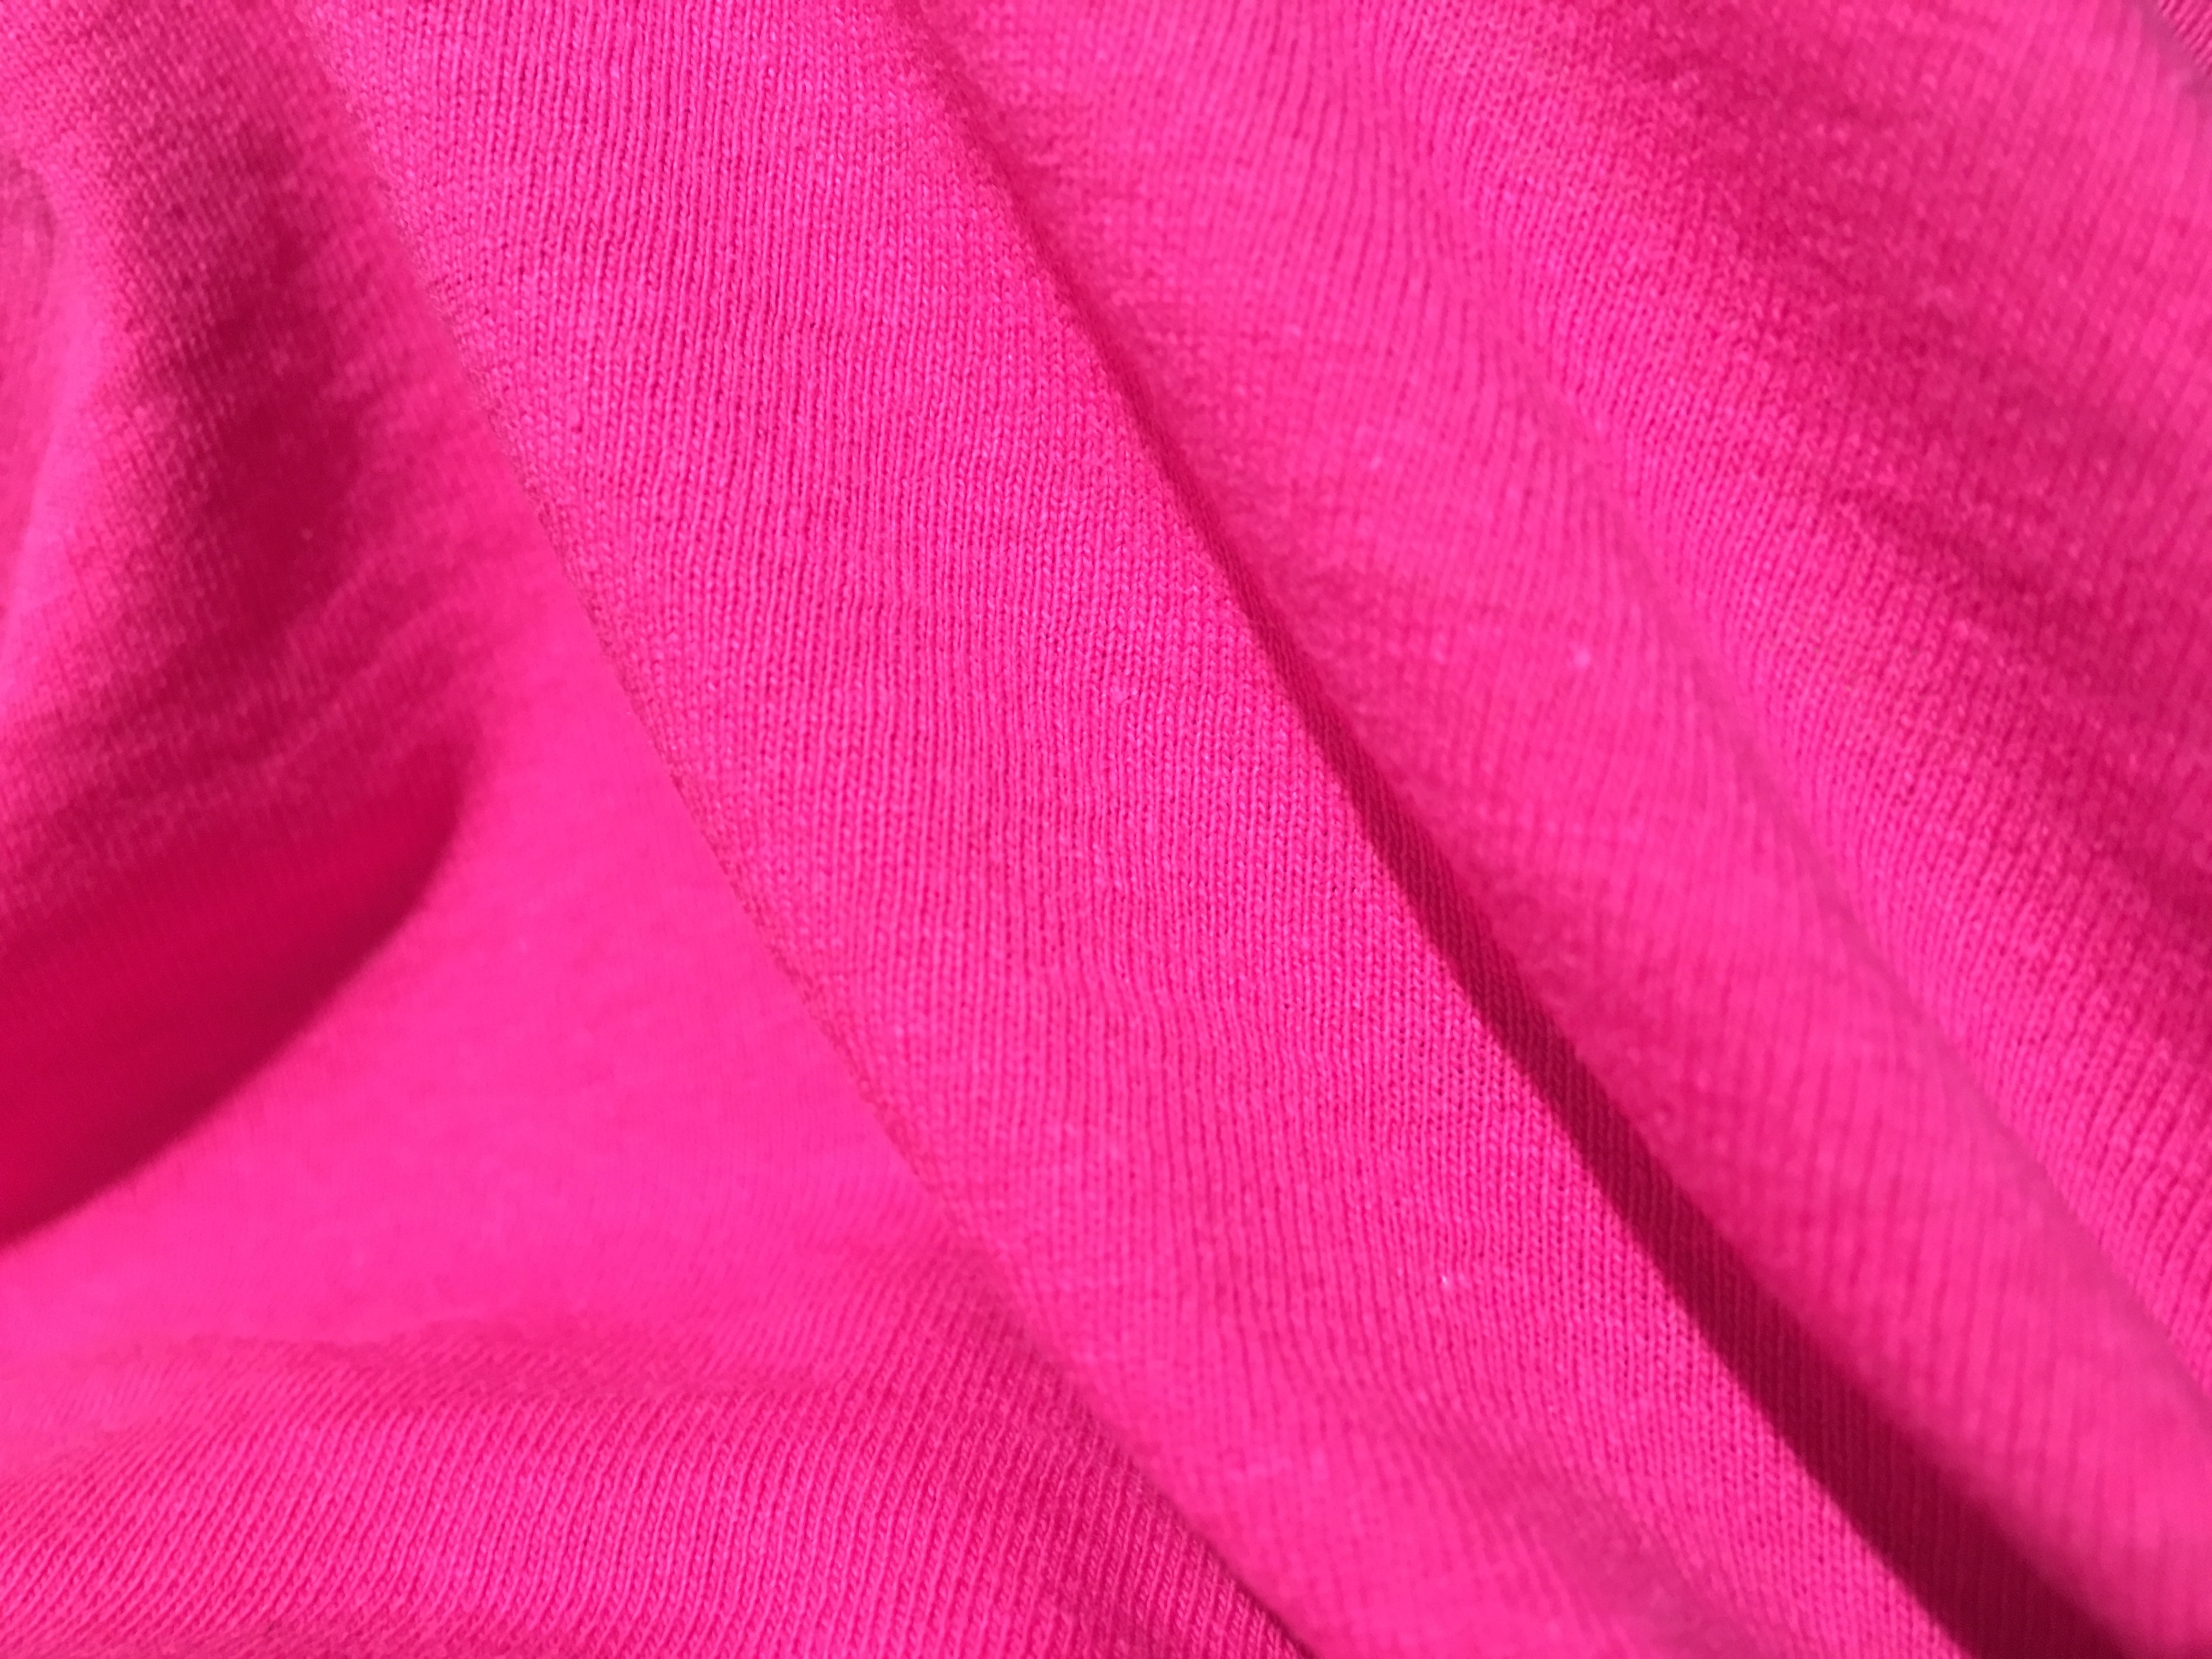 pink textile